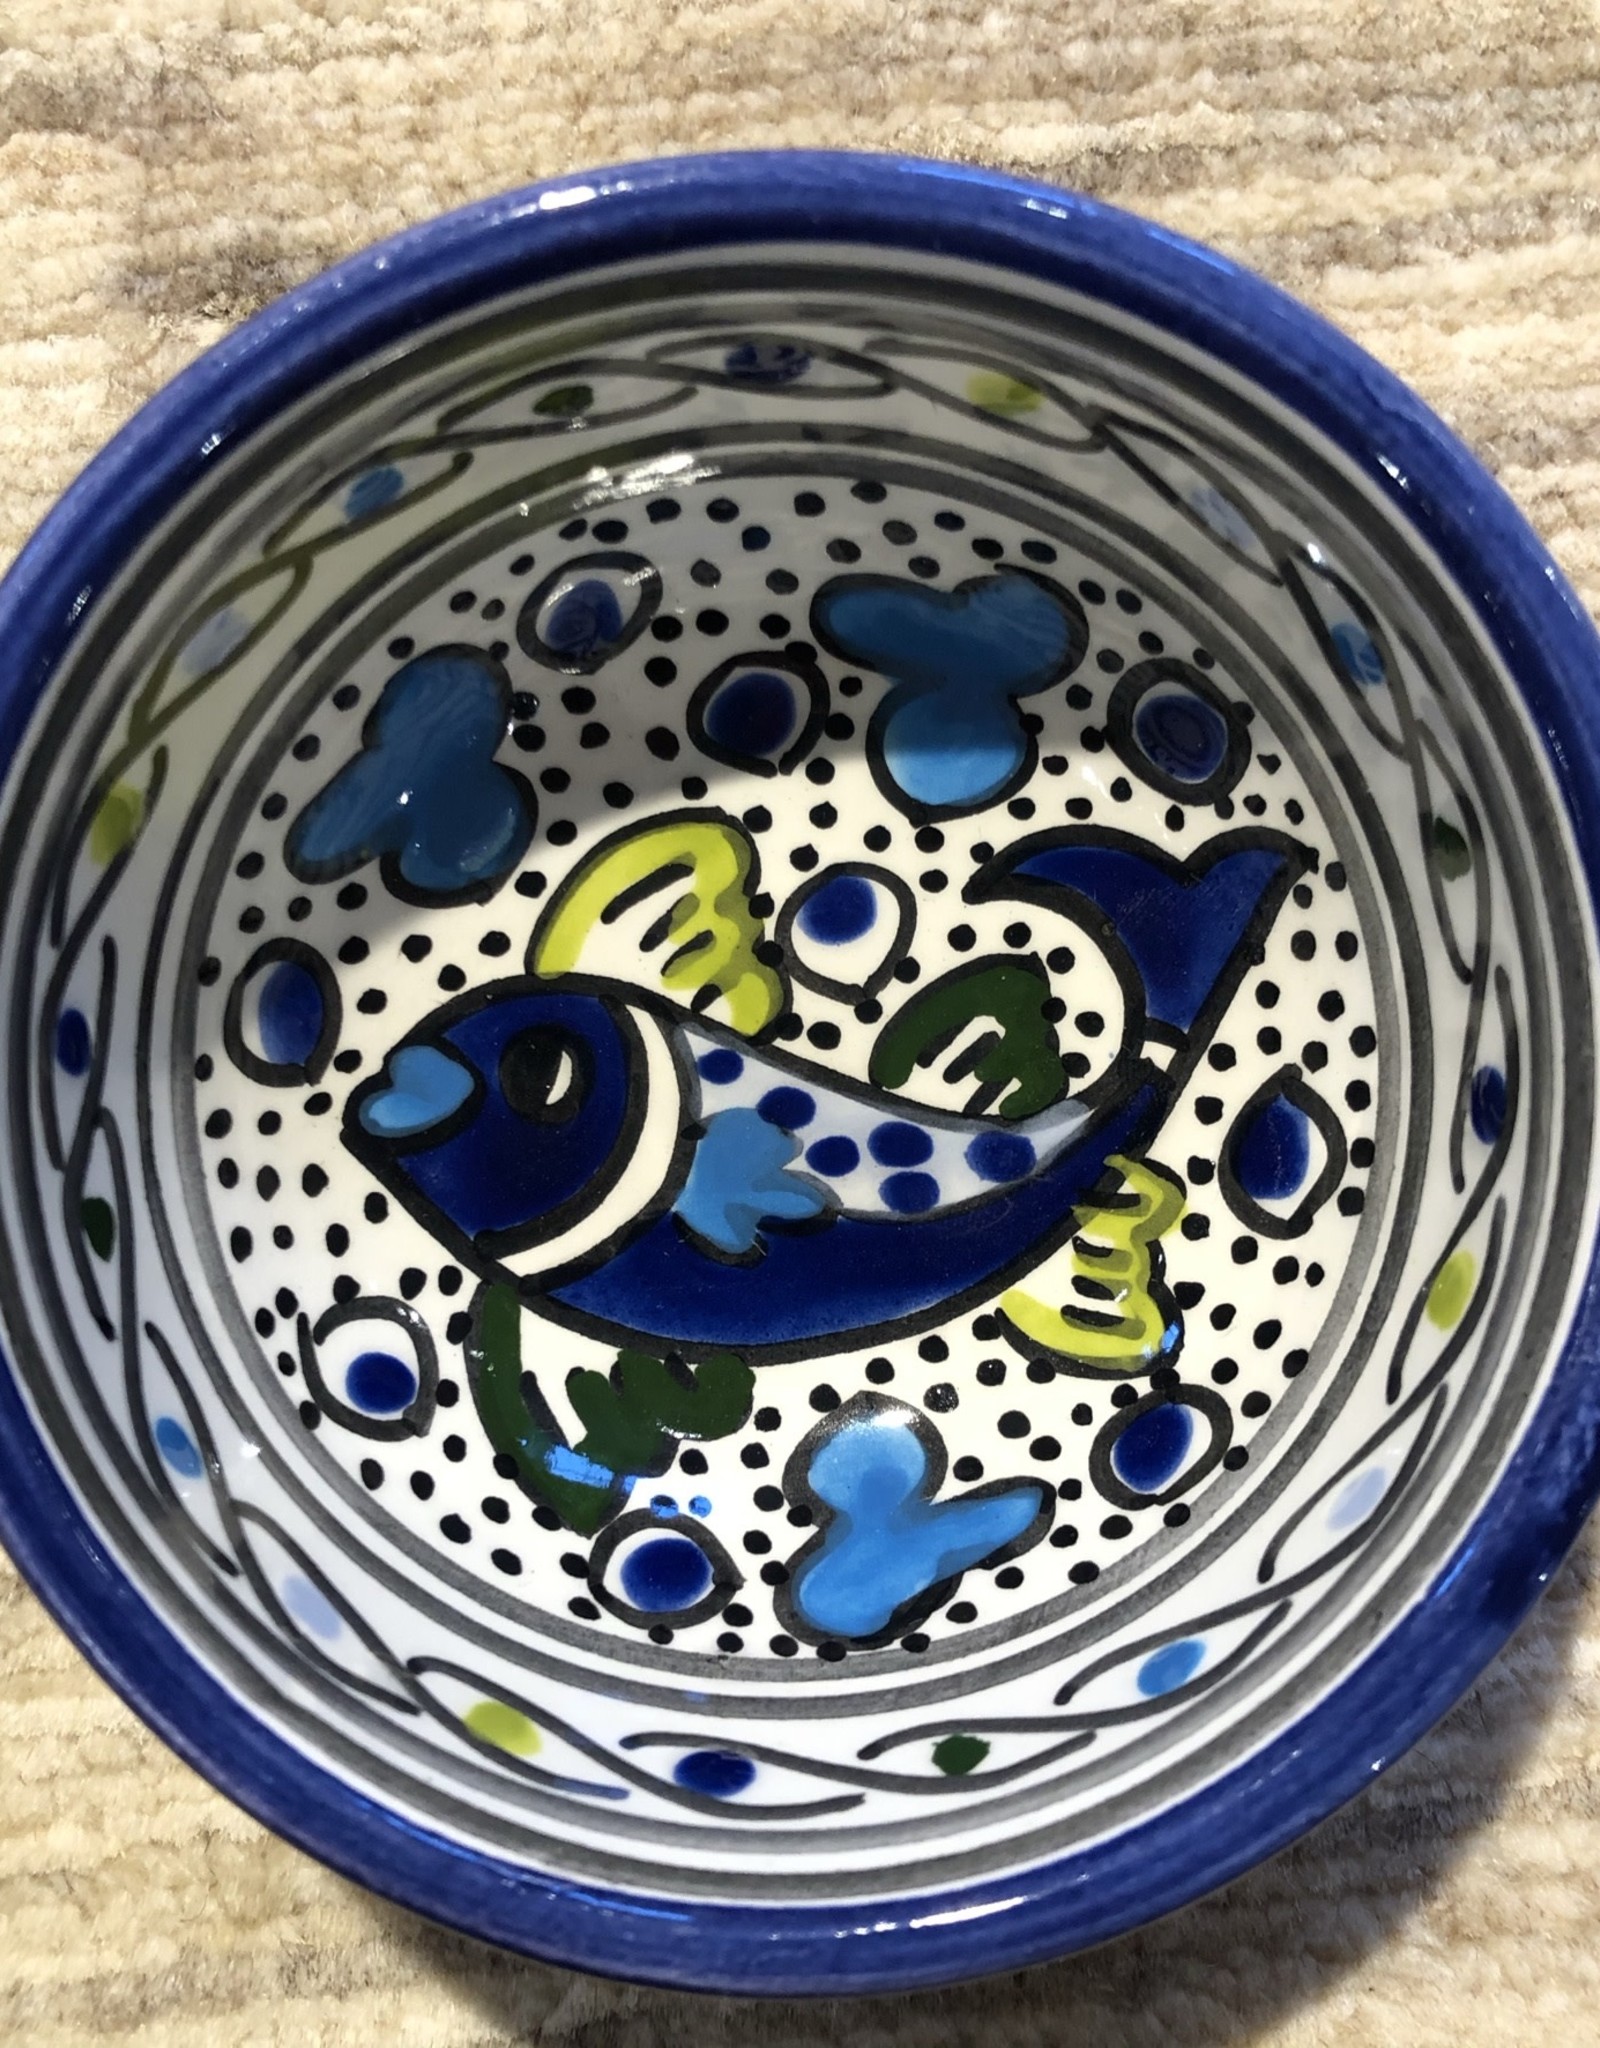 Sobremesa Blue Fish Small Ceramic Bowl